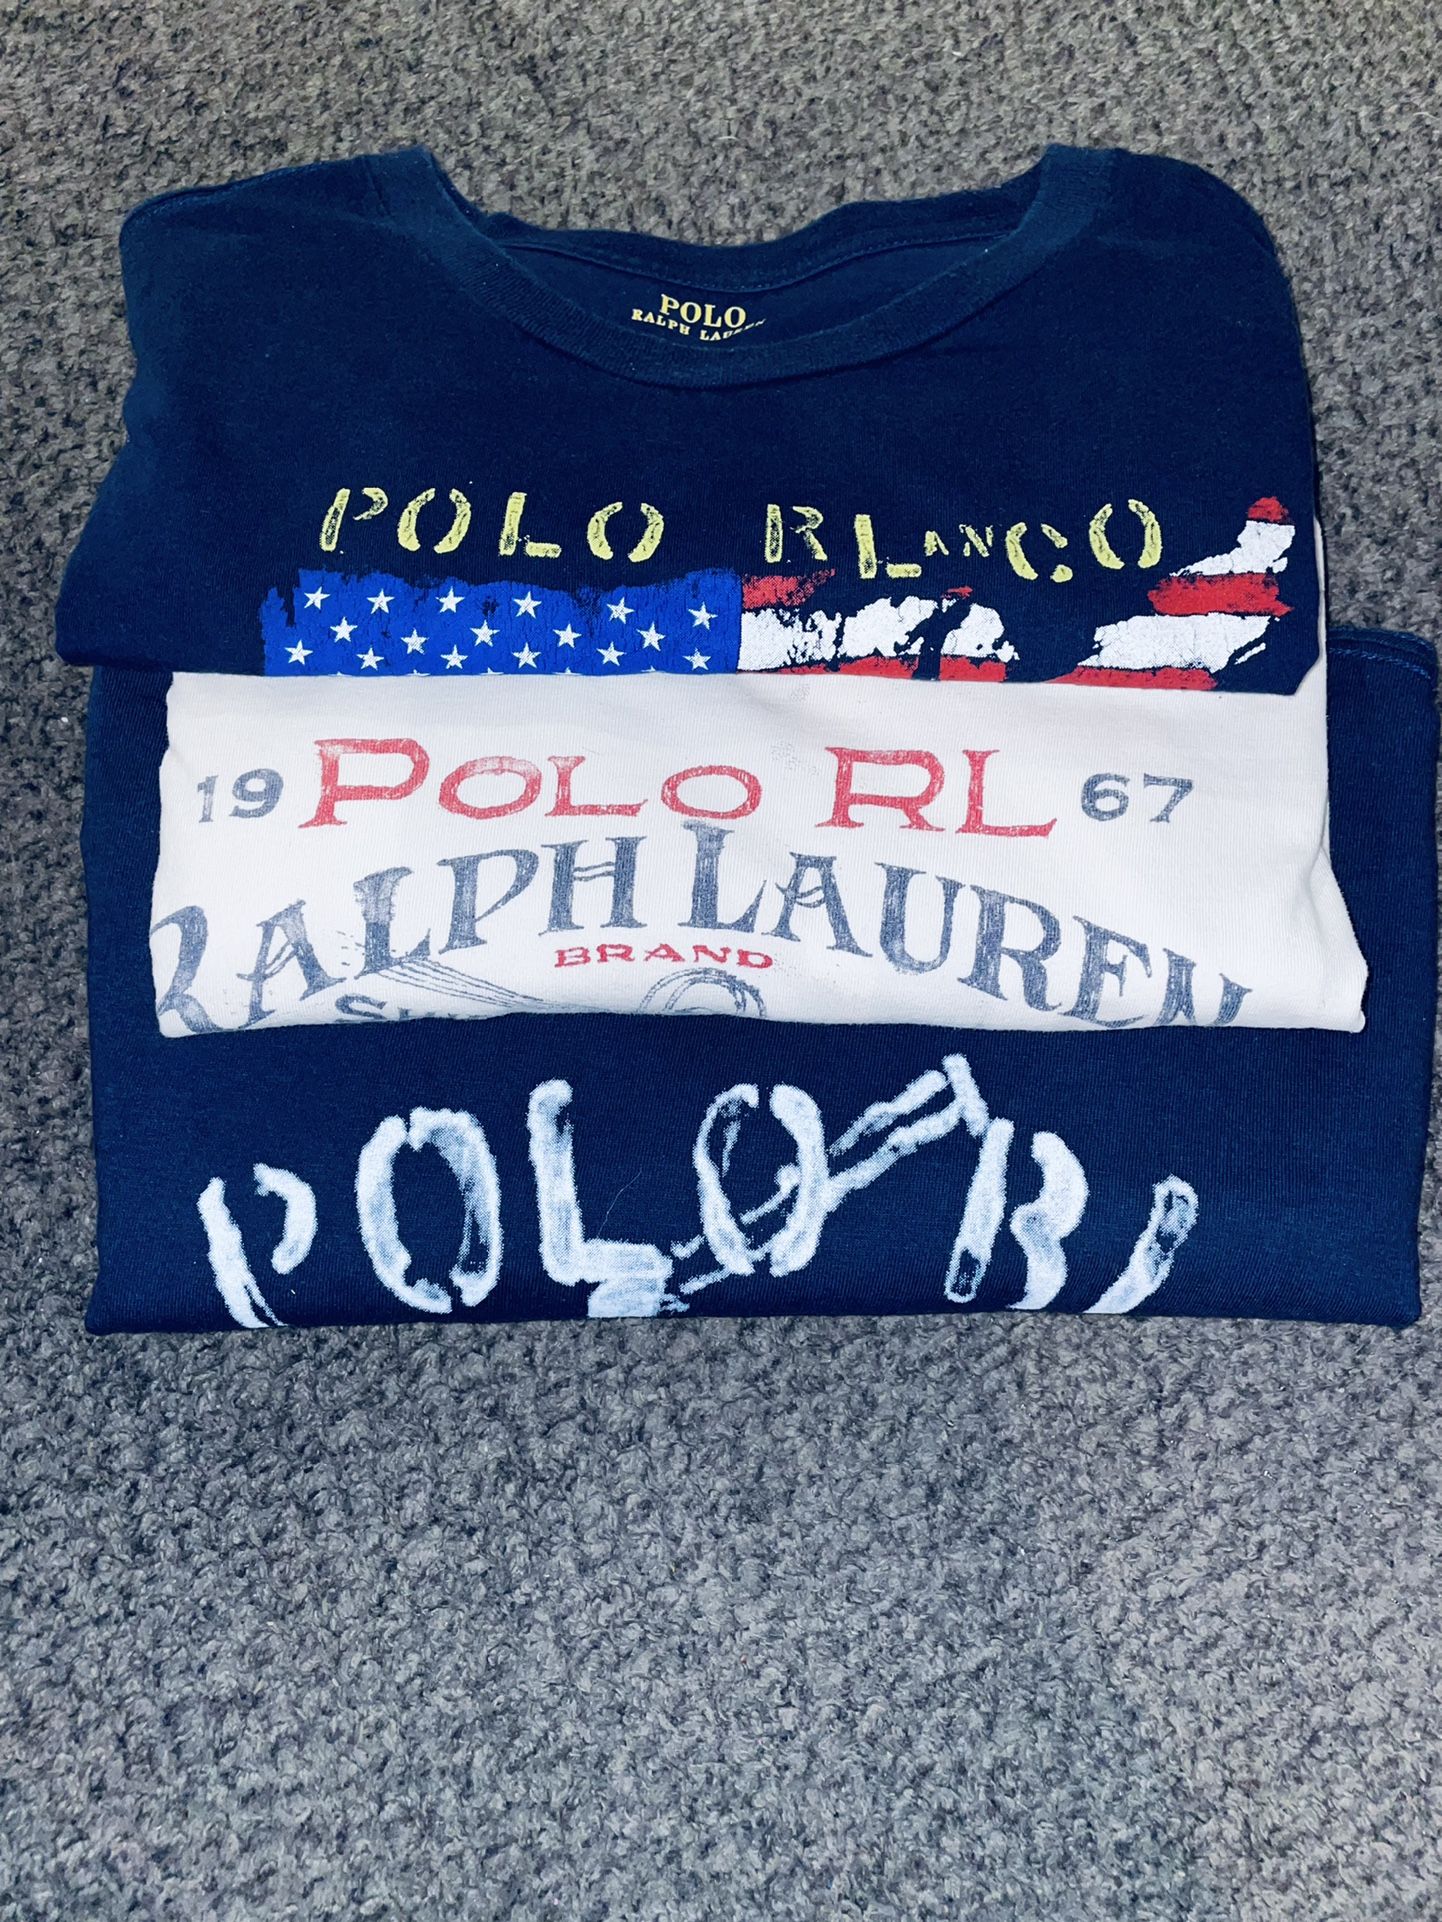 Ralph Lauren Polo Tshirts 